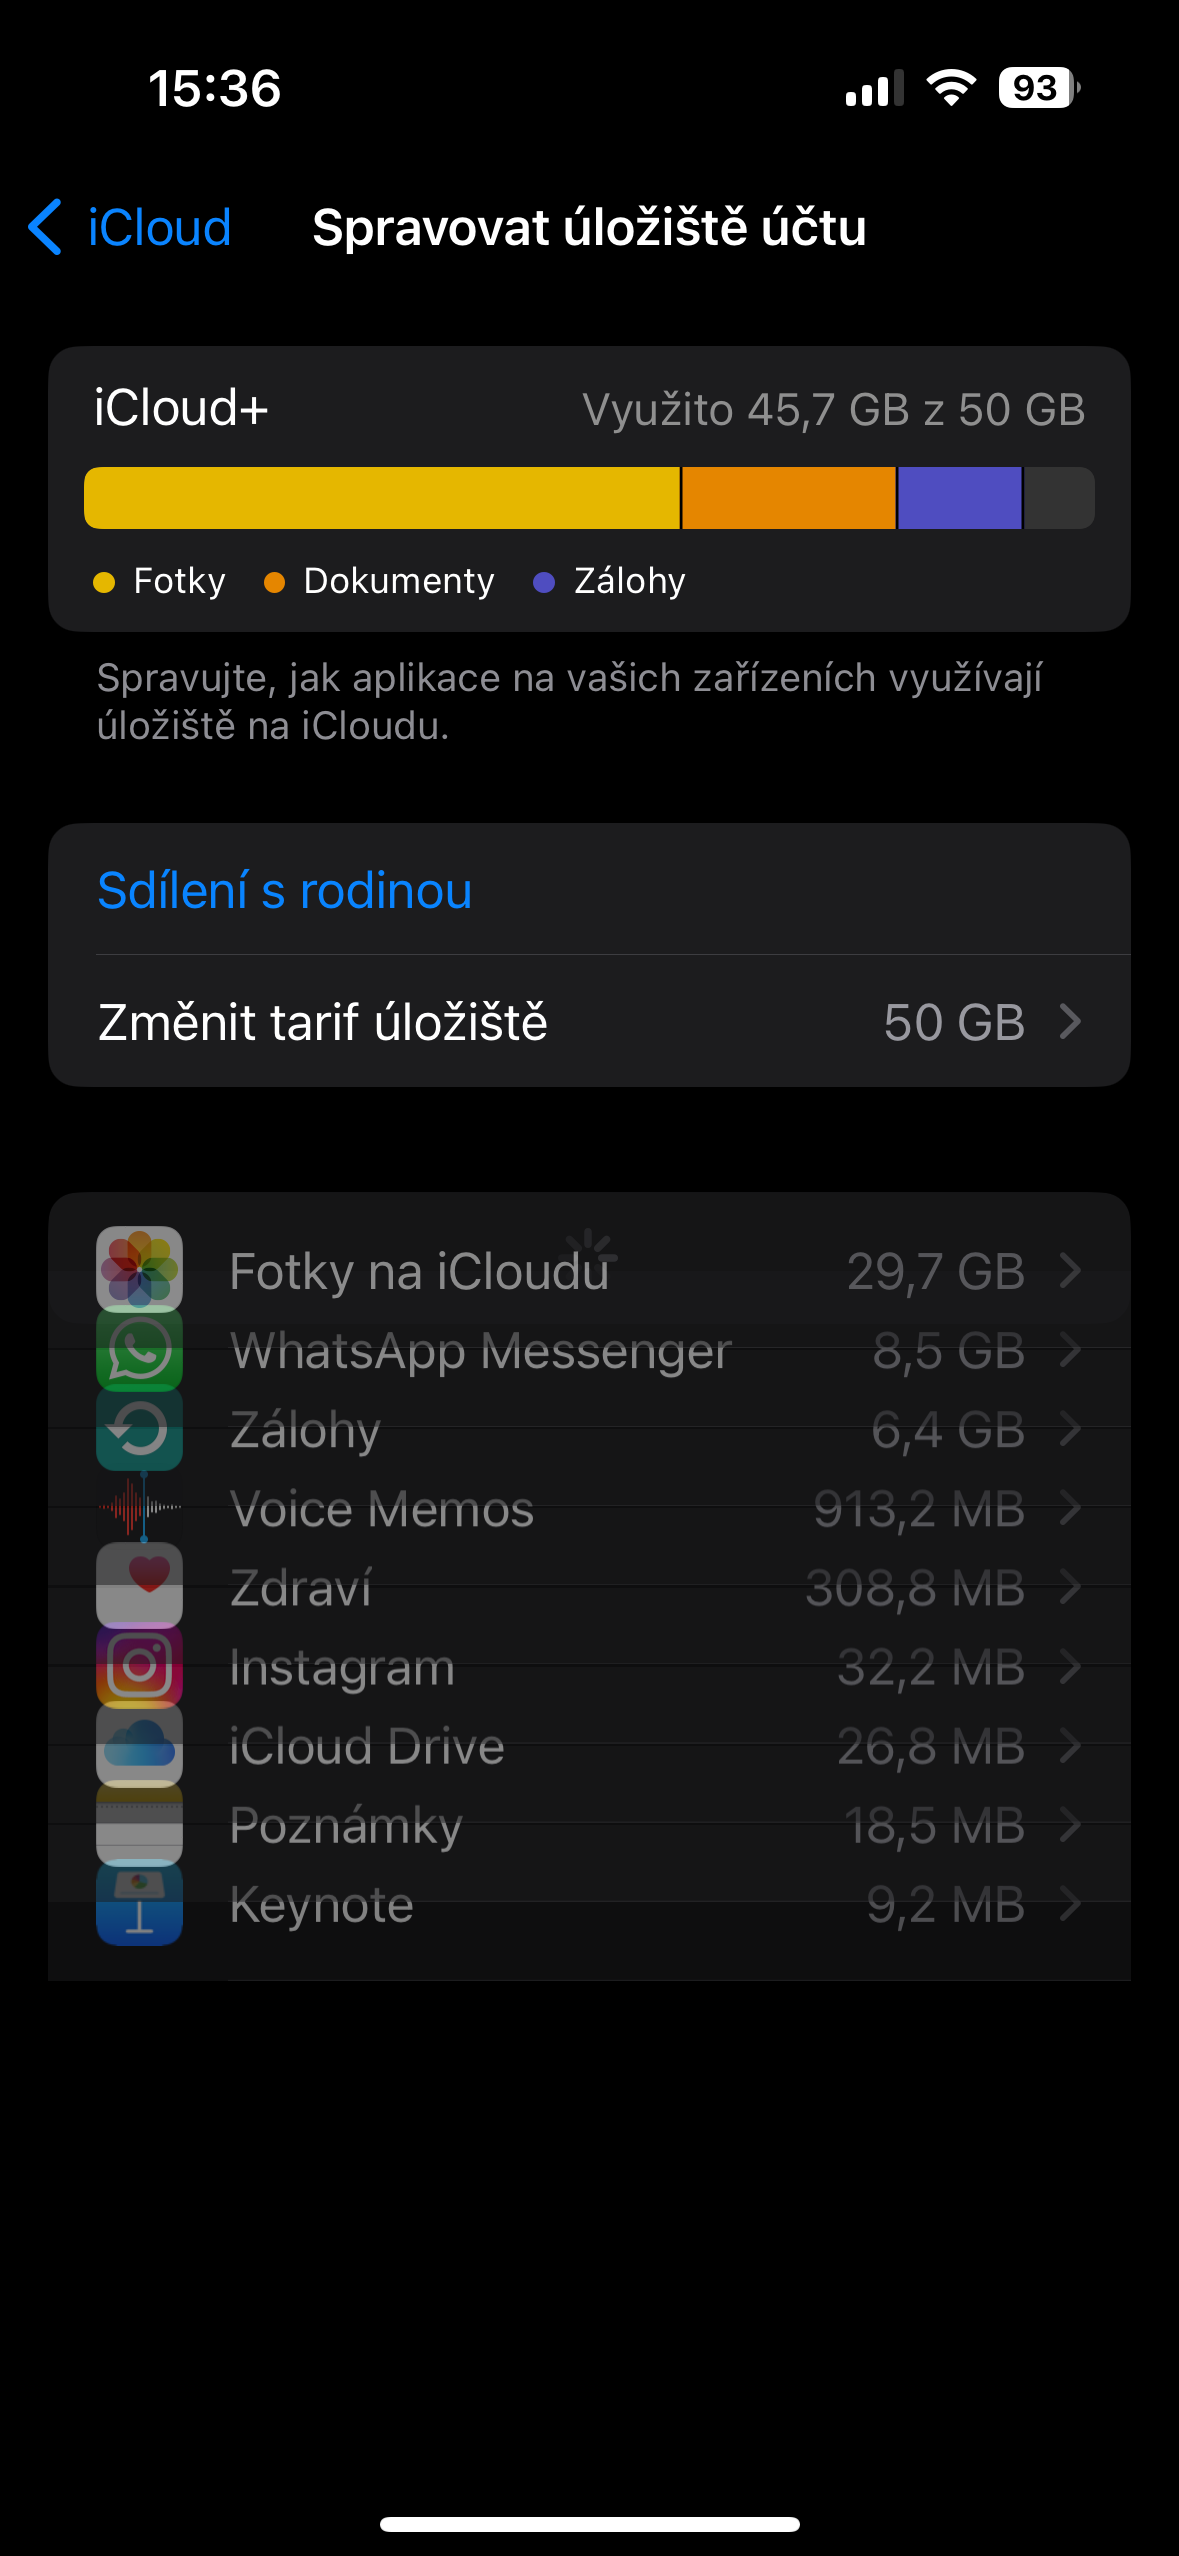 iCloud mobilenet.cz radí